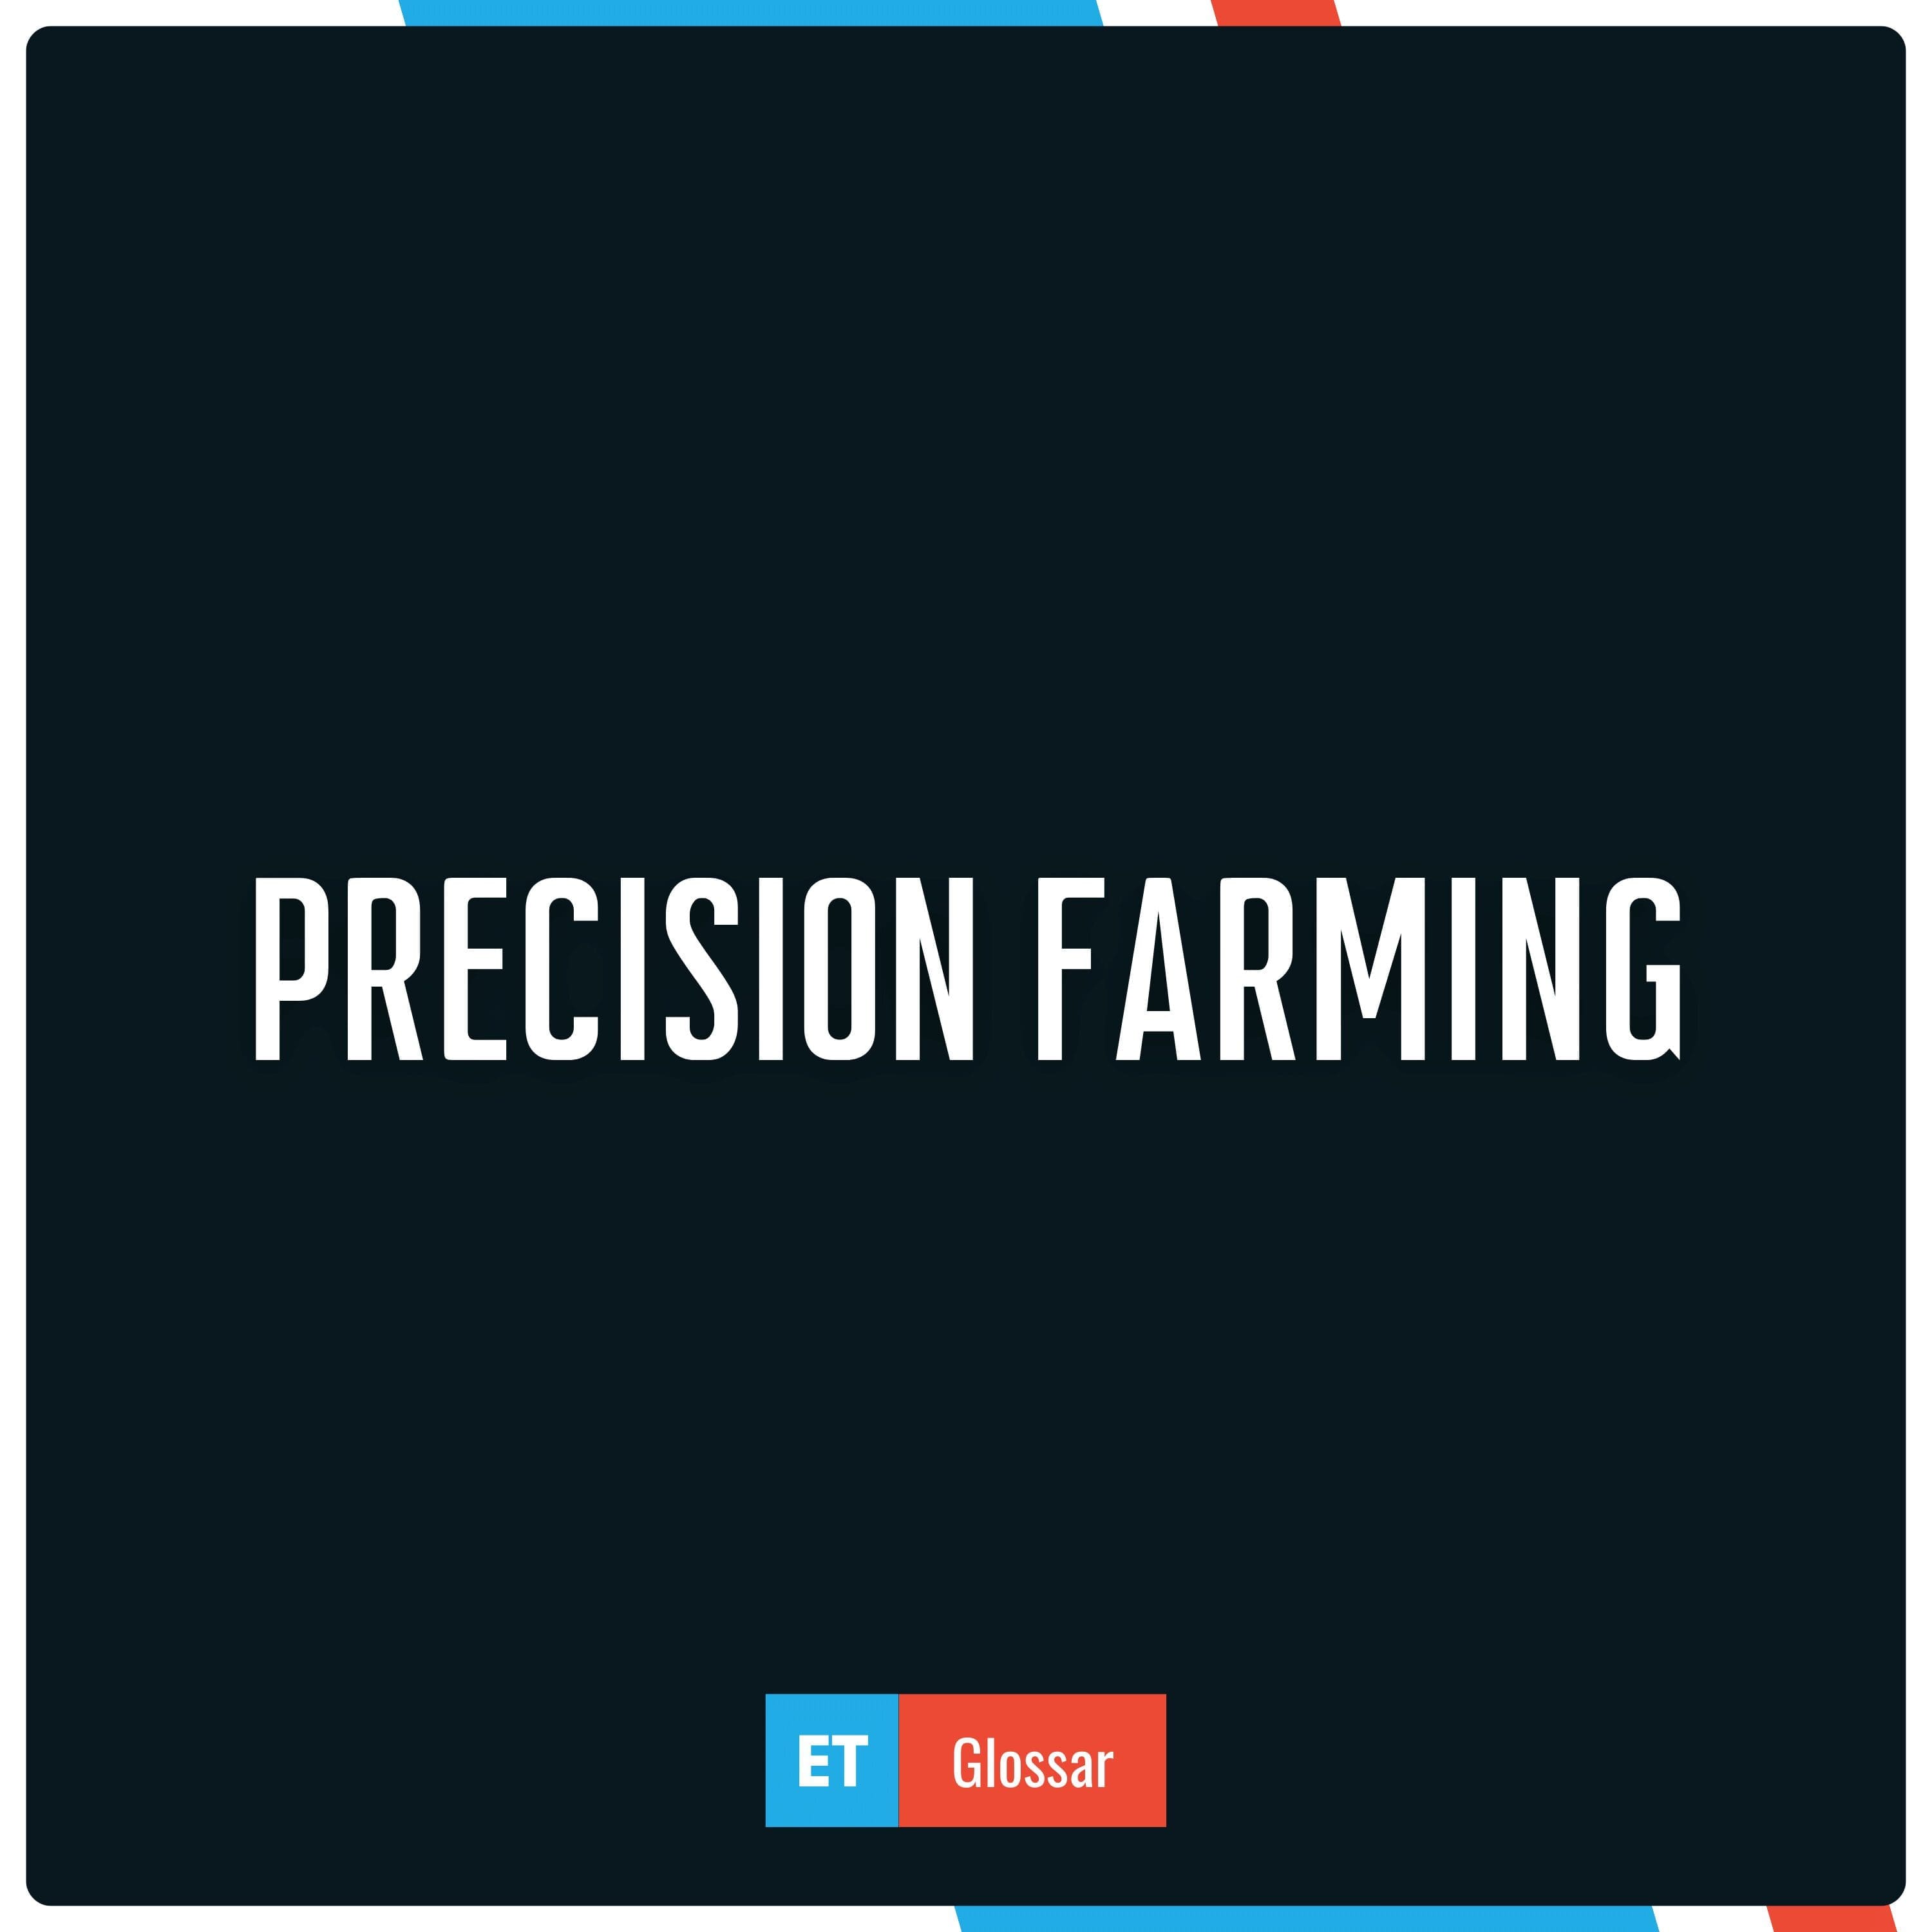 Precision Farming einfach erklärt im Exciting Tech Glossar